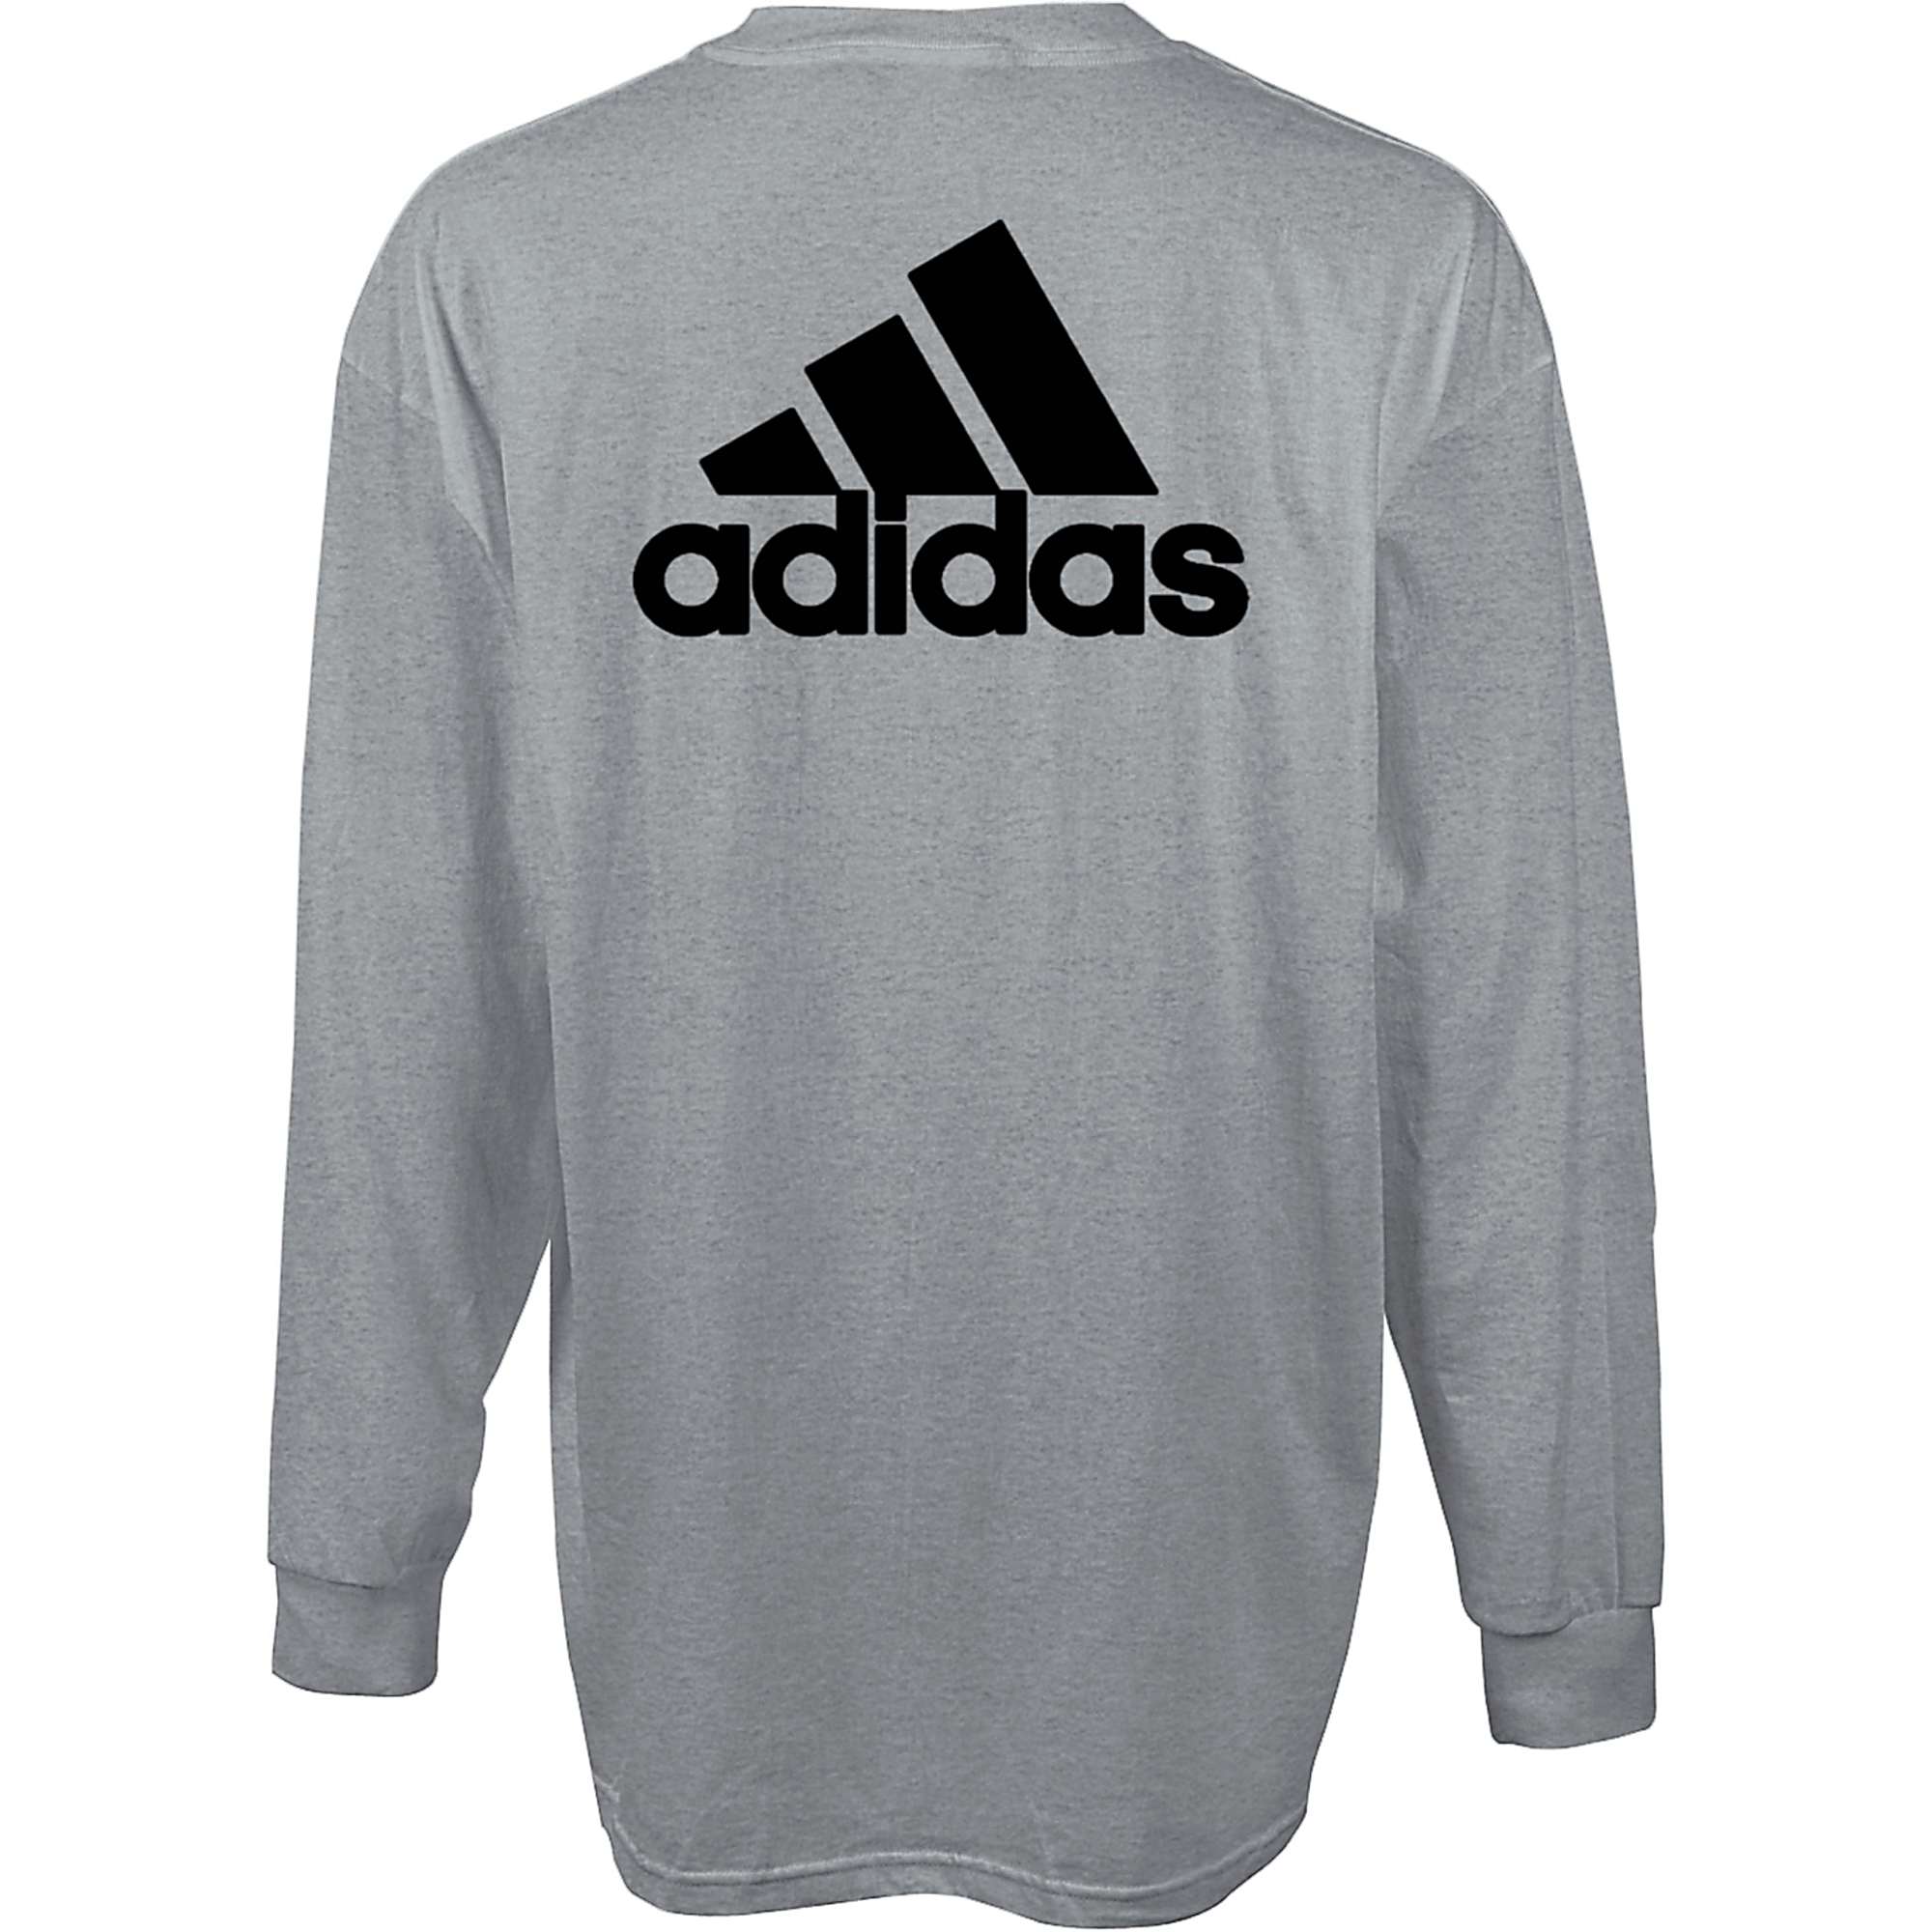 Adidas Men's Long Sleeve Graphic Logo T-Shirt | eBay